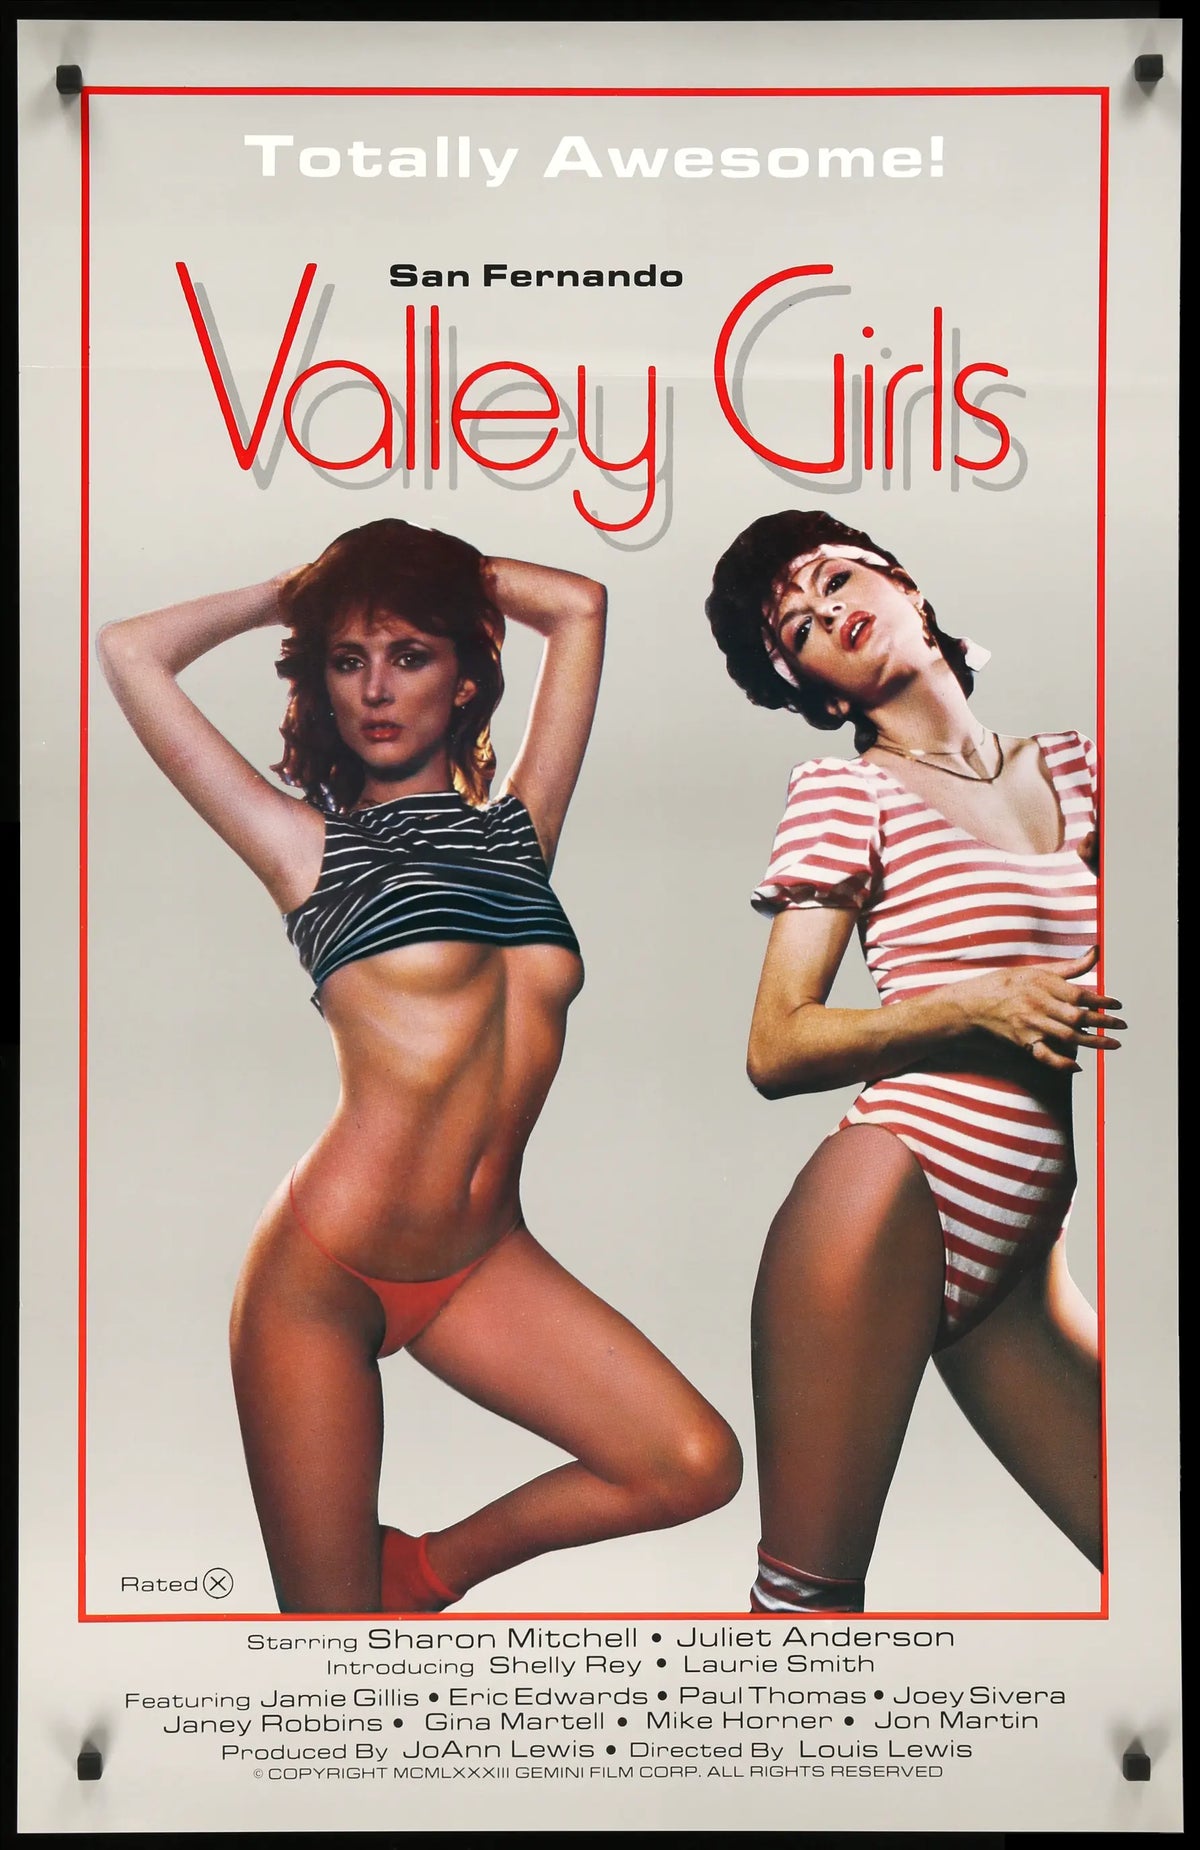 San Fernando Valley Girls (1988) original movie poster for sale at Original Film Art